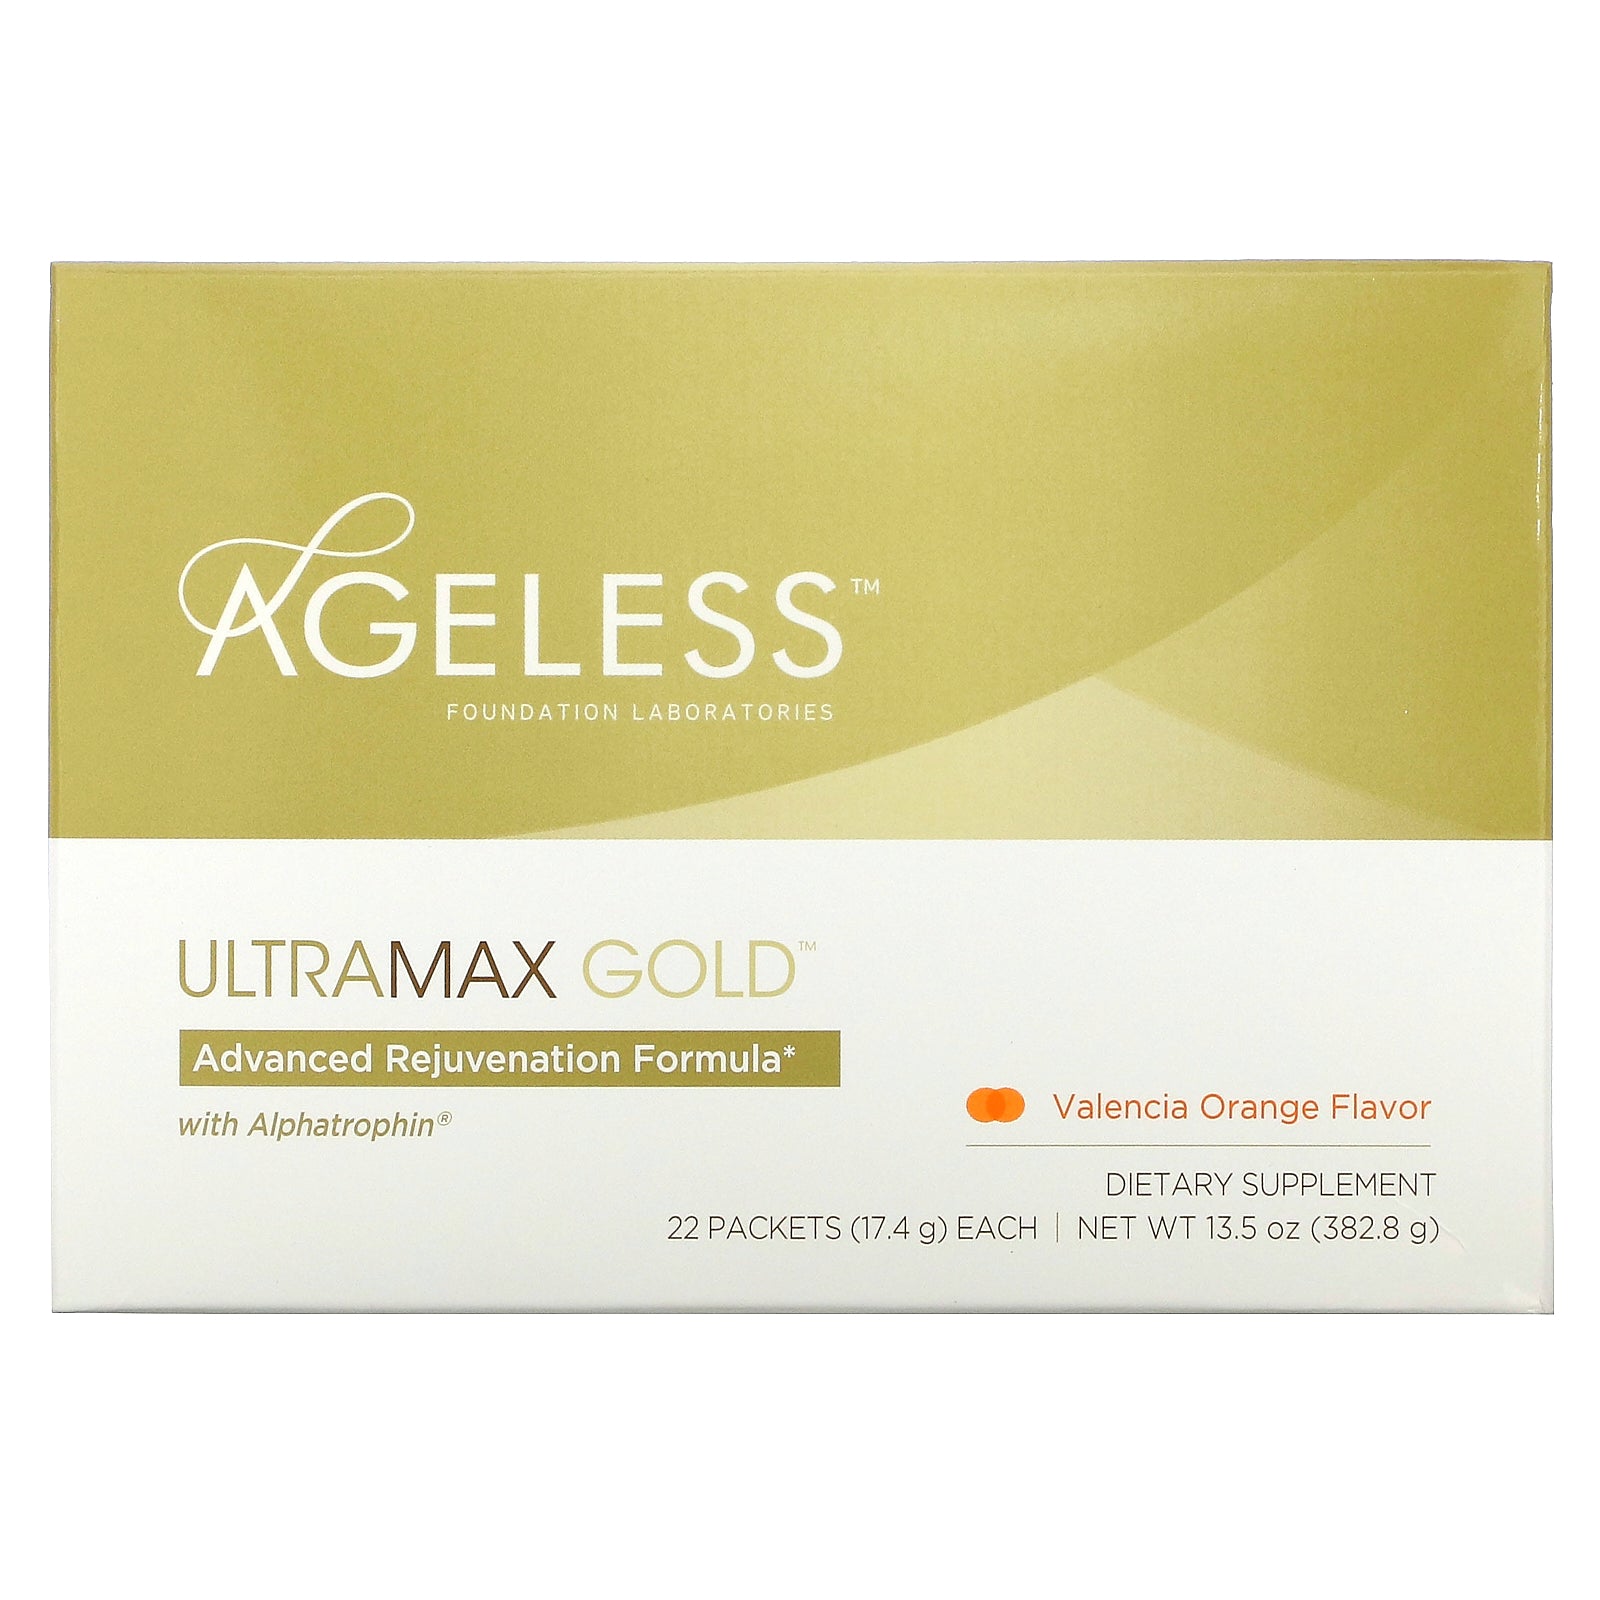 Ageless Foundation Laboratories, UltraMax Gold, Advanced Rejuvenation Formula with Alphatrophin, Valencia Orange Flavor, 22 Packets, 17.4 g Each